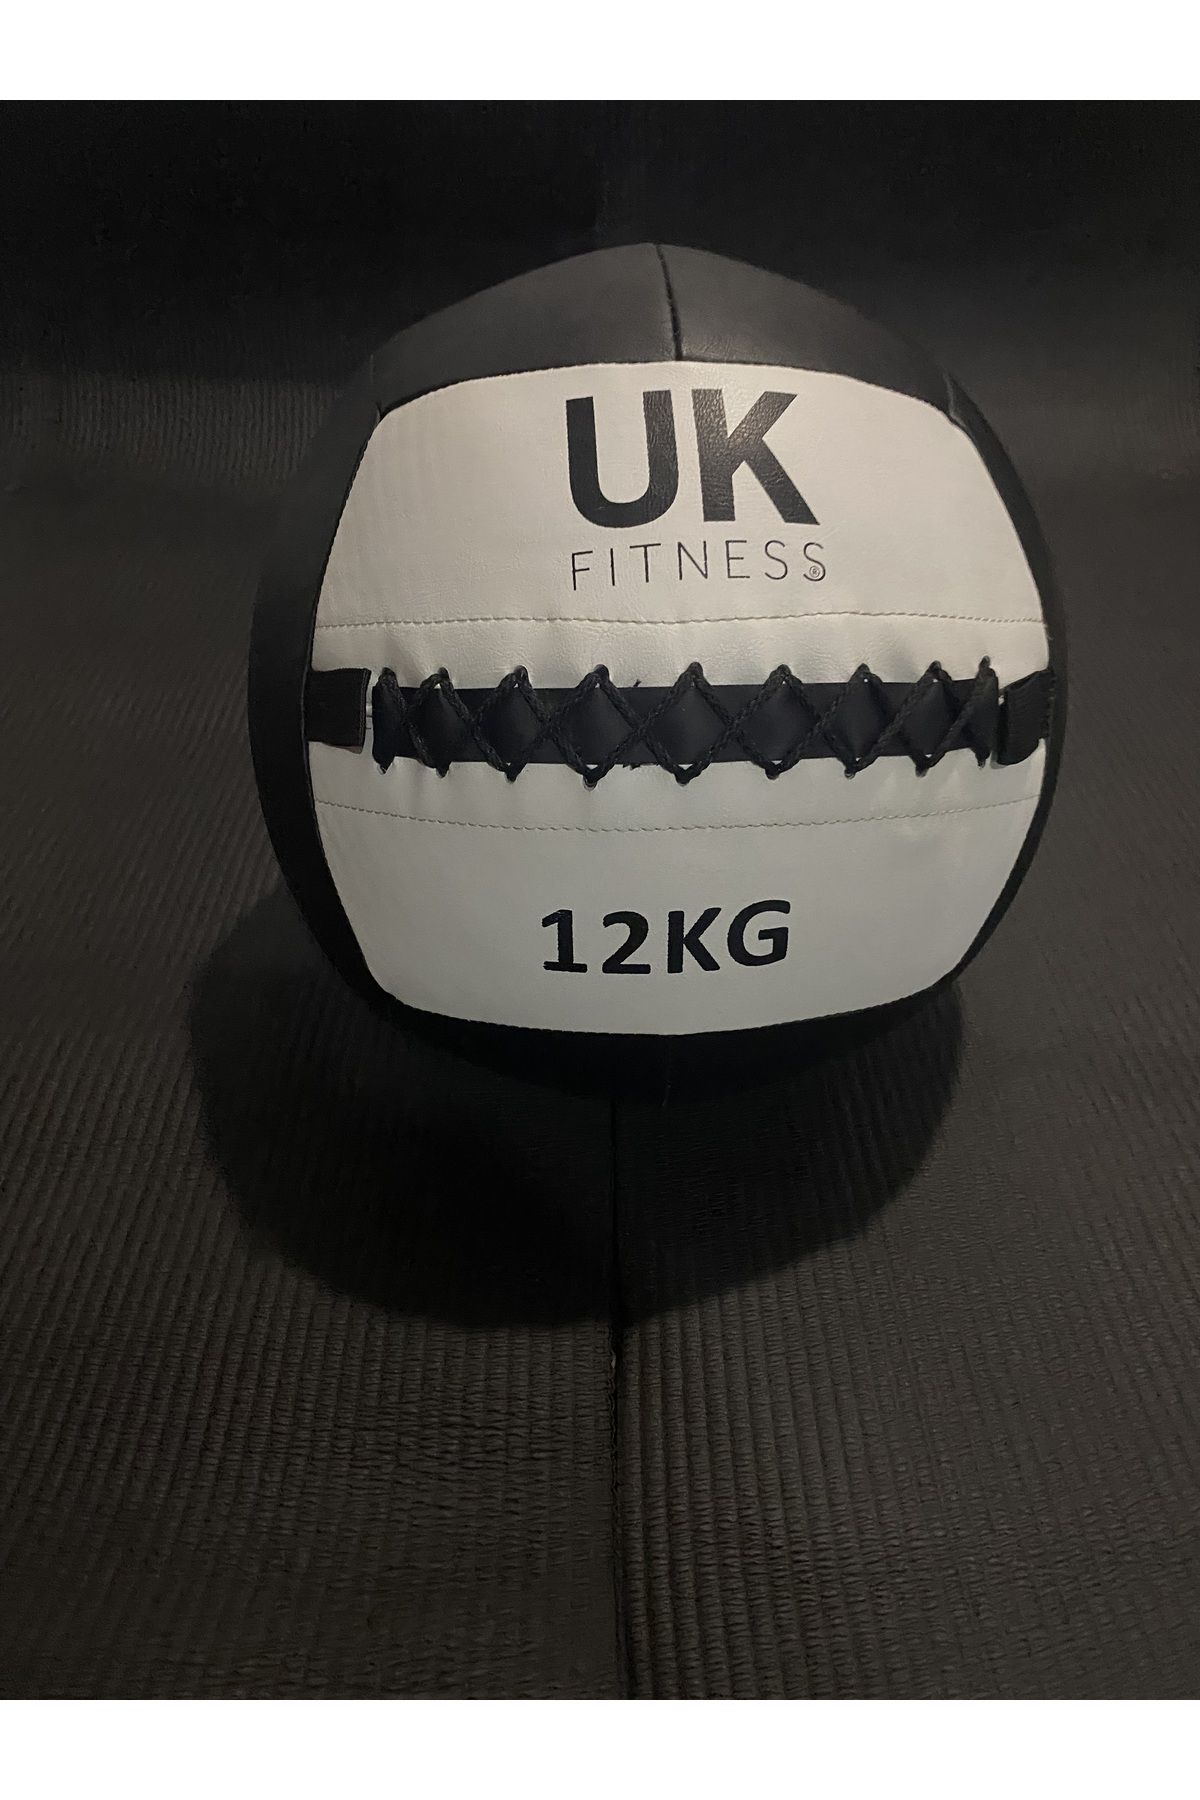 UK FİTNESS Uk Fitness Crossfit Deri Sağlık/duvar Topu Medicine/wall Balls 12 Kg Pro.